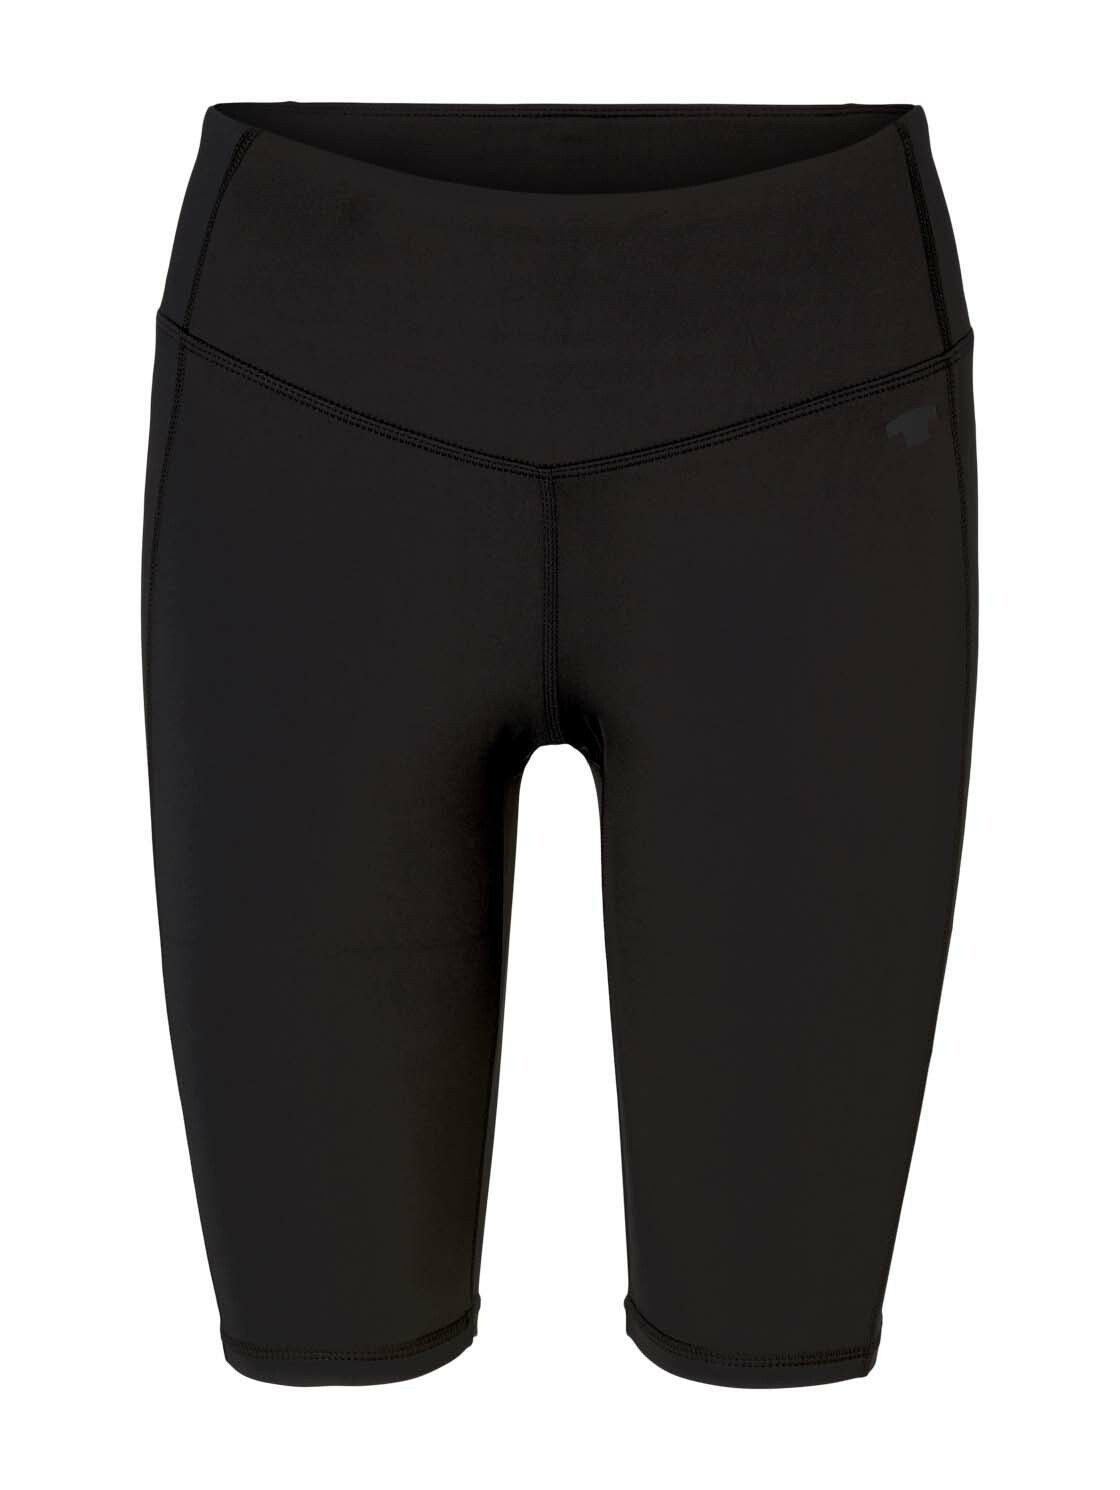 Sporthose Skinny black TAILOR TOM Fit Shorts